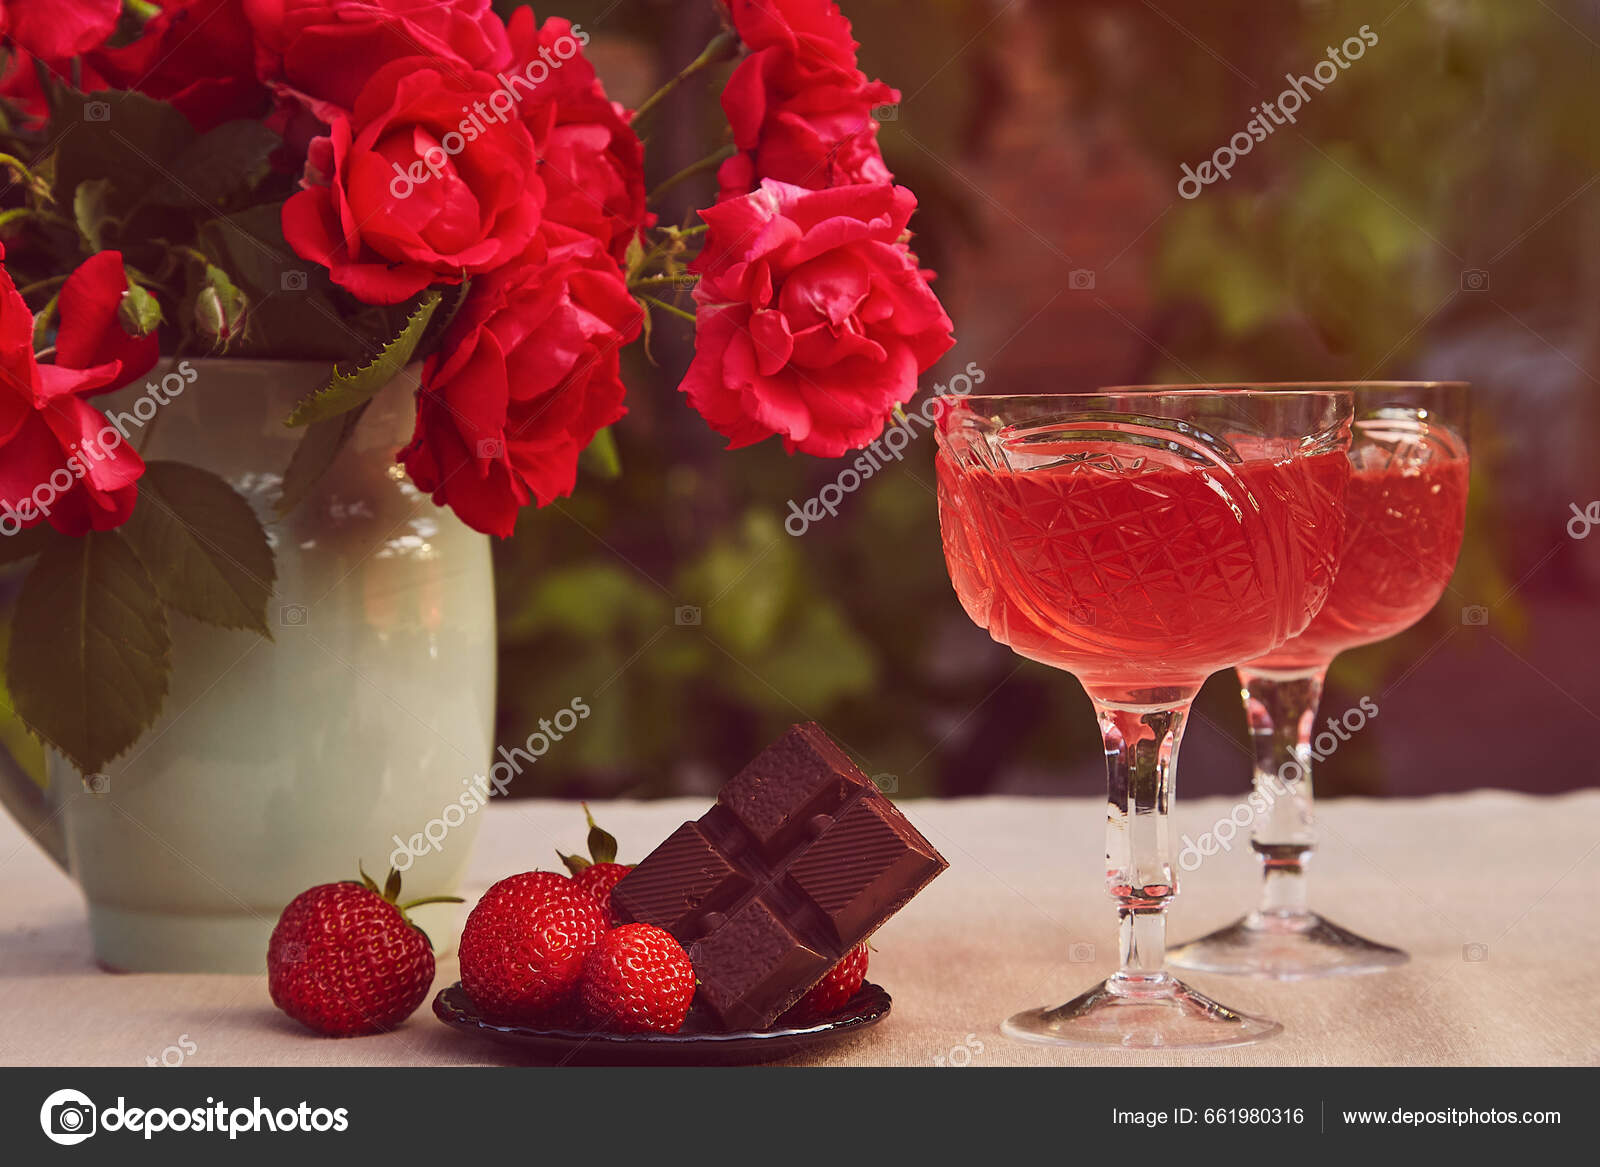 https://st5.depositphotos.com/14840782/66198/i/1600/depositphotos_661980316-stock-photo-aesthetic-summer-table-settings-couple.jpg